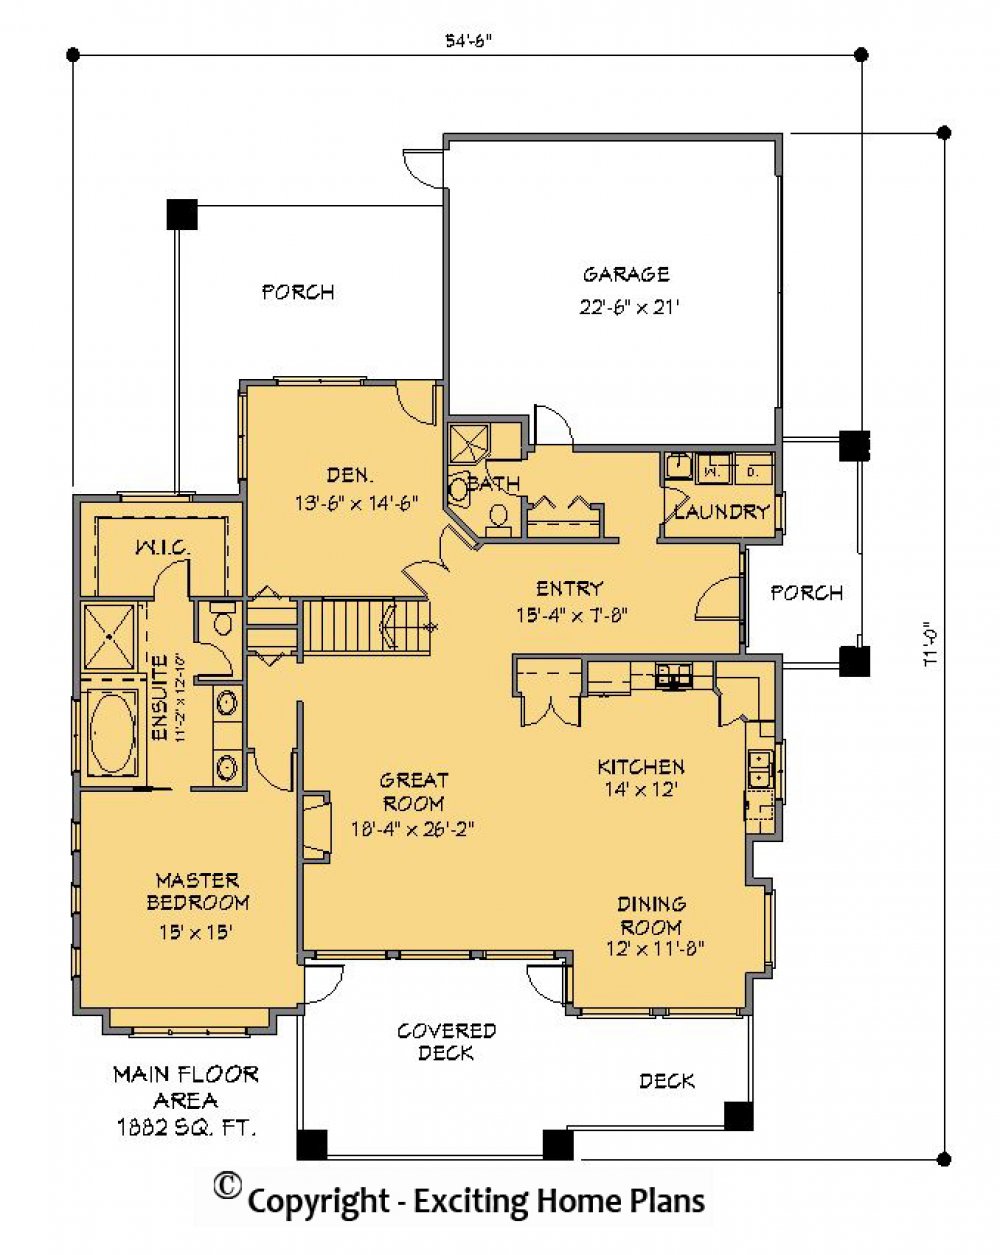 House Plan E1195-10  Main Floor Plan